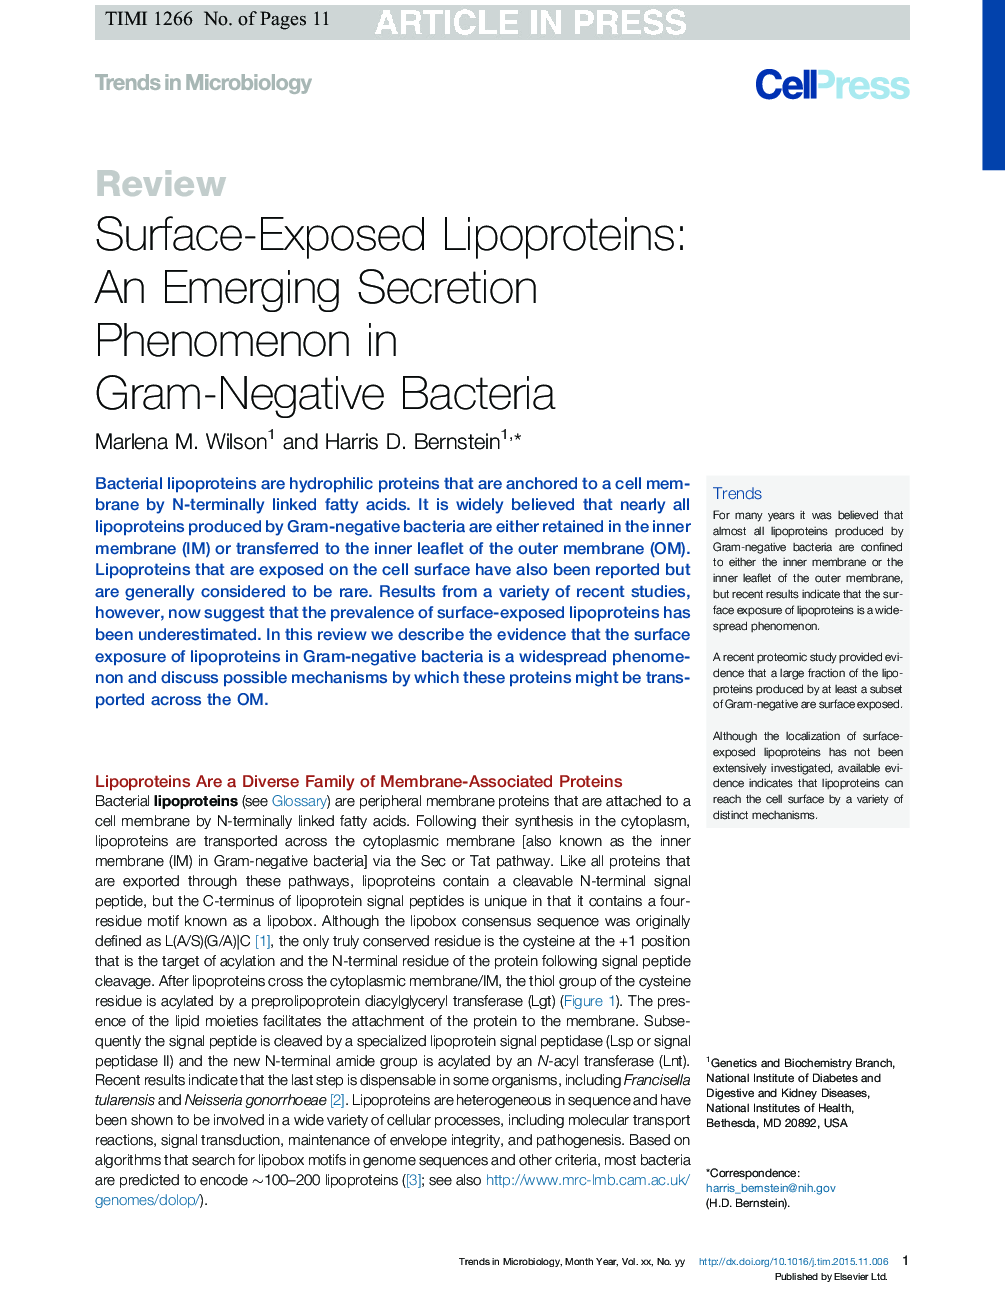 Surface-Exposed Lipoproteins: An Emerging Secretion Phenomenon in Gram-Negative Bacteria